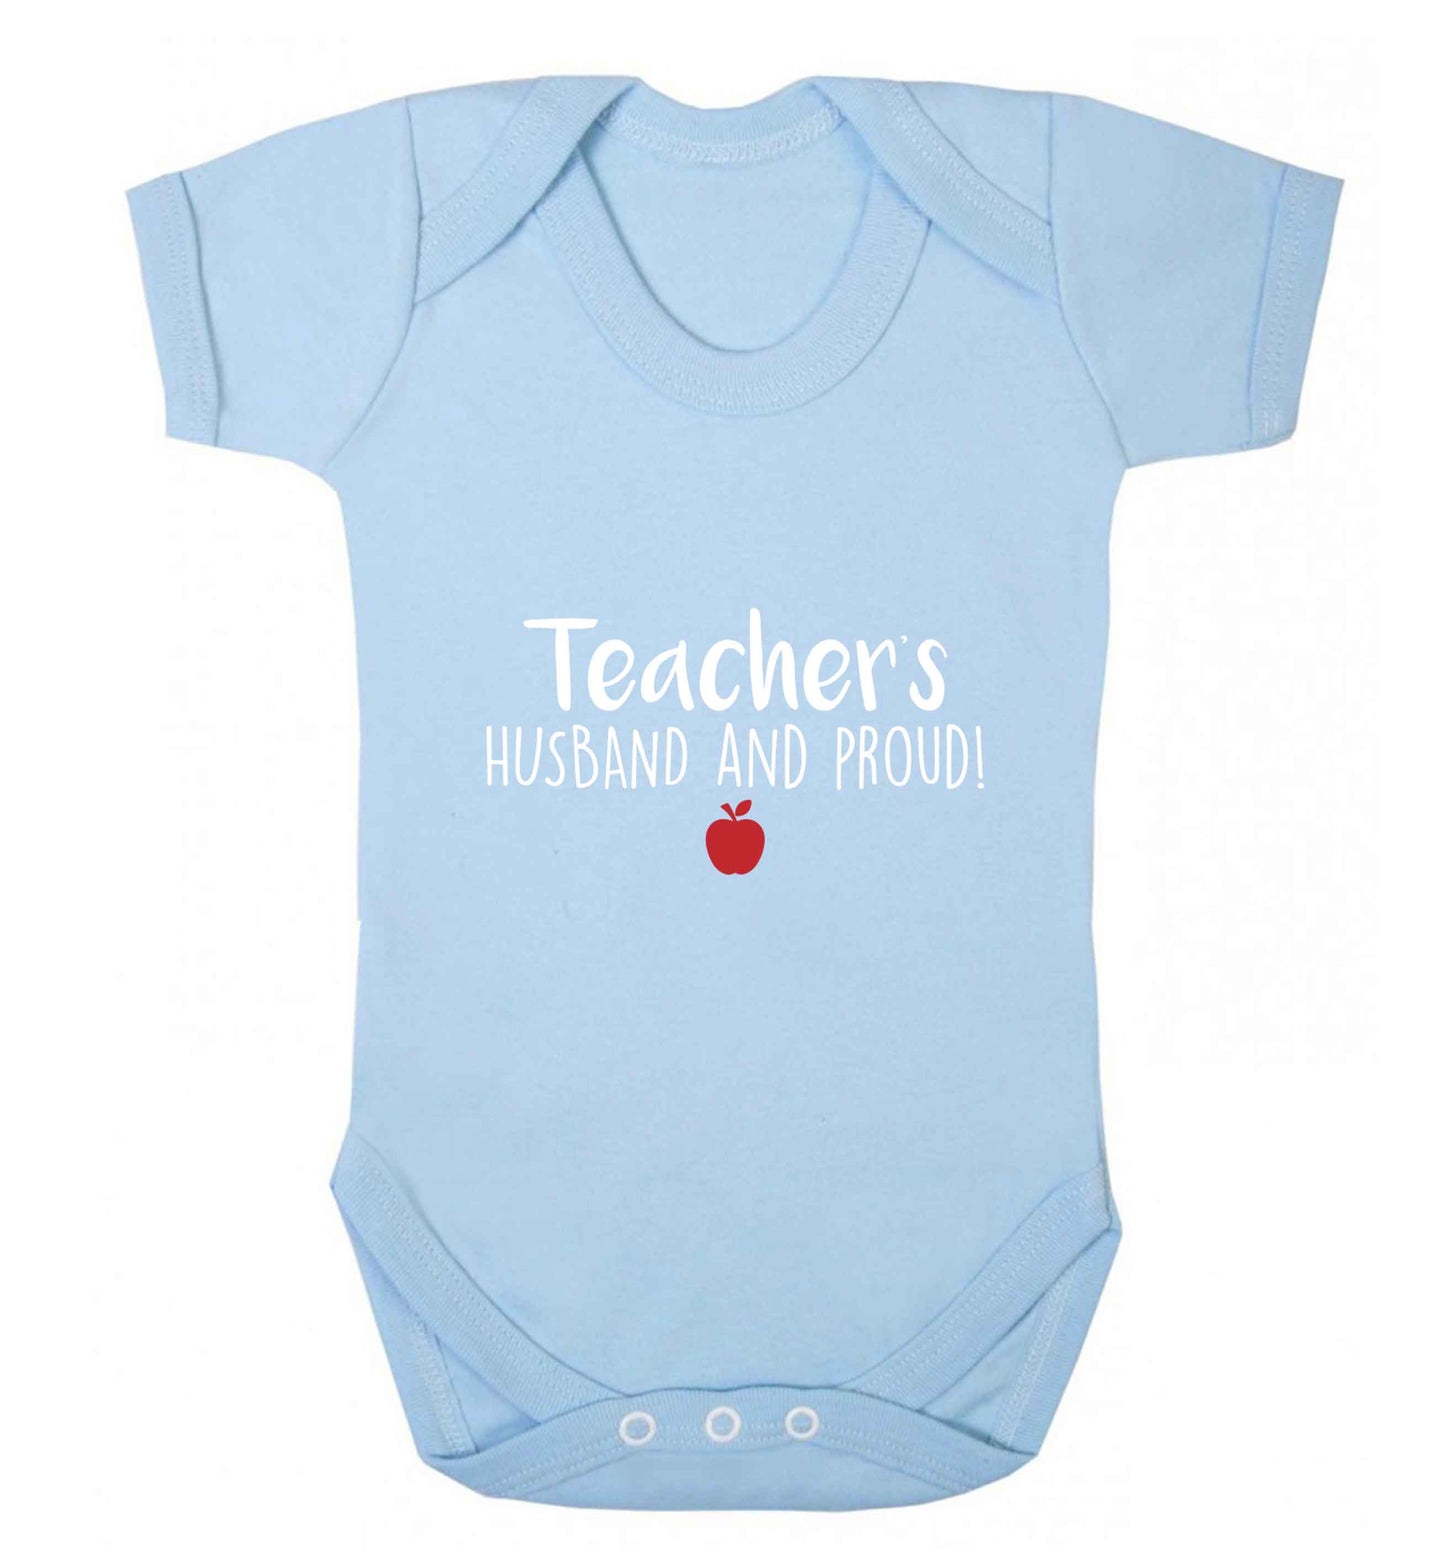 Teachers husband and proud baby vest pale blue 18-24 months